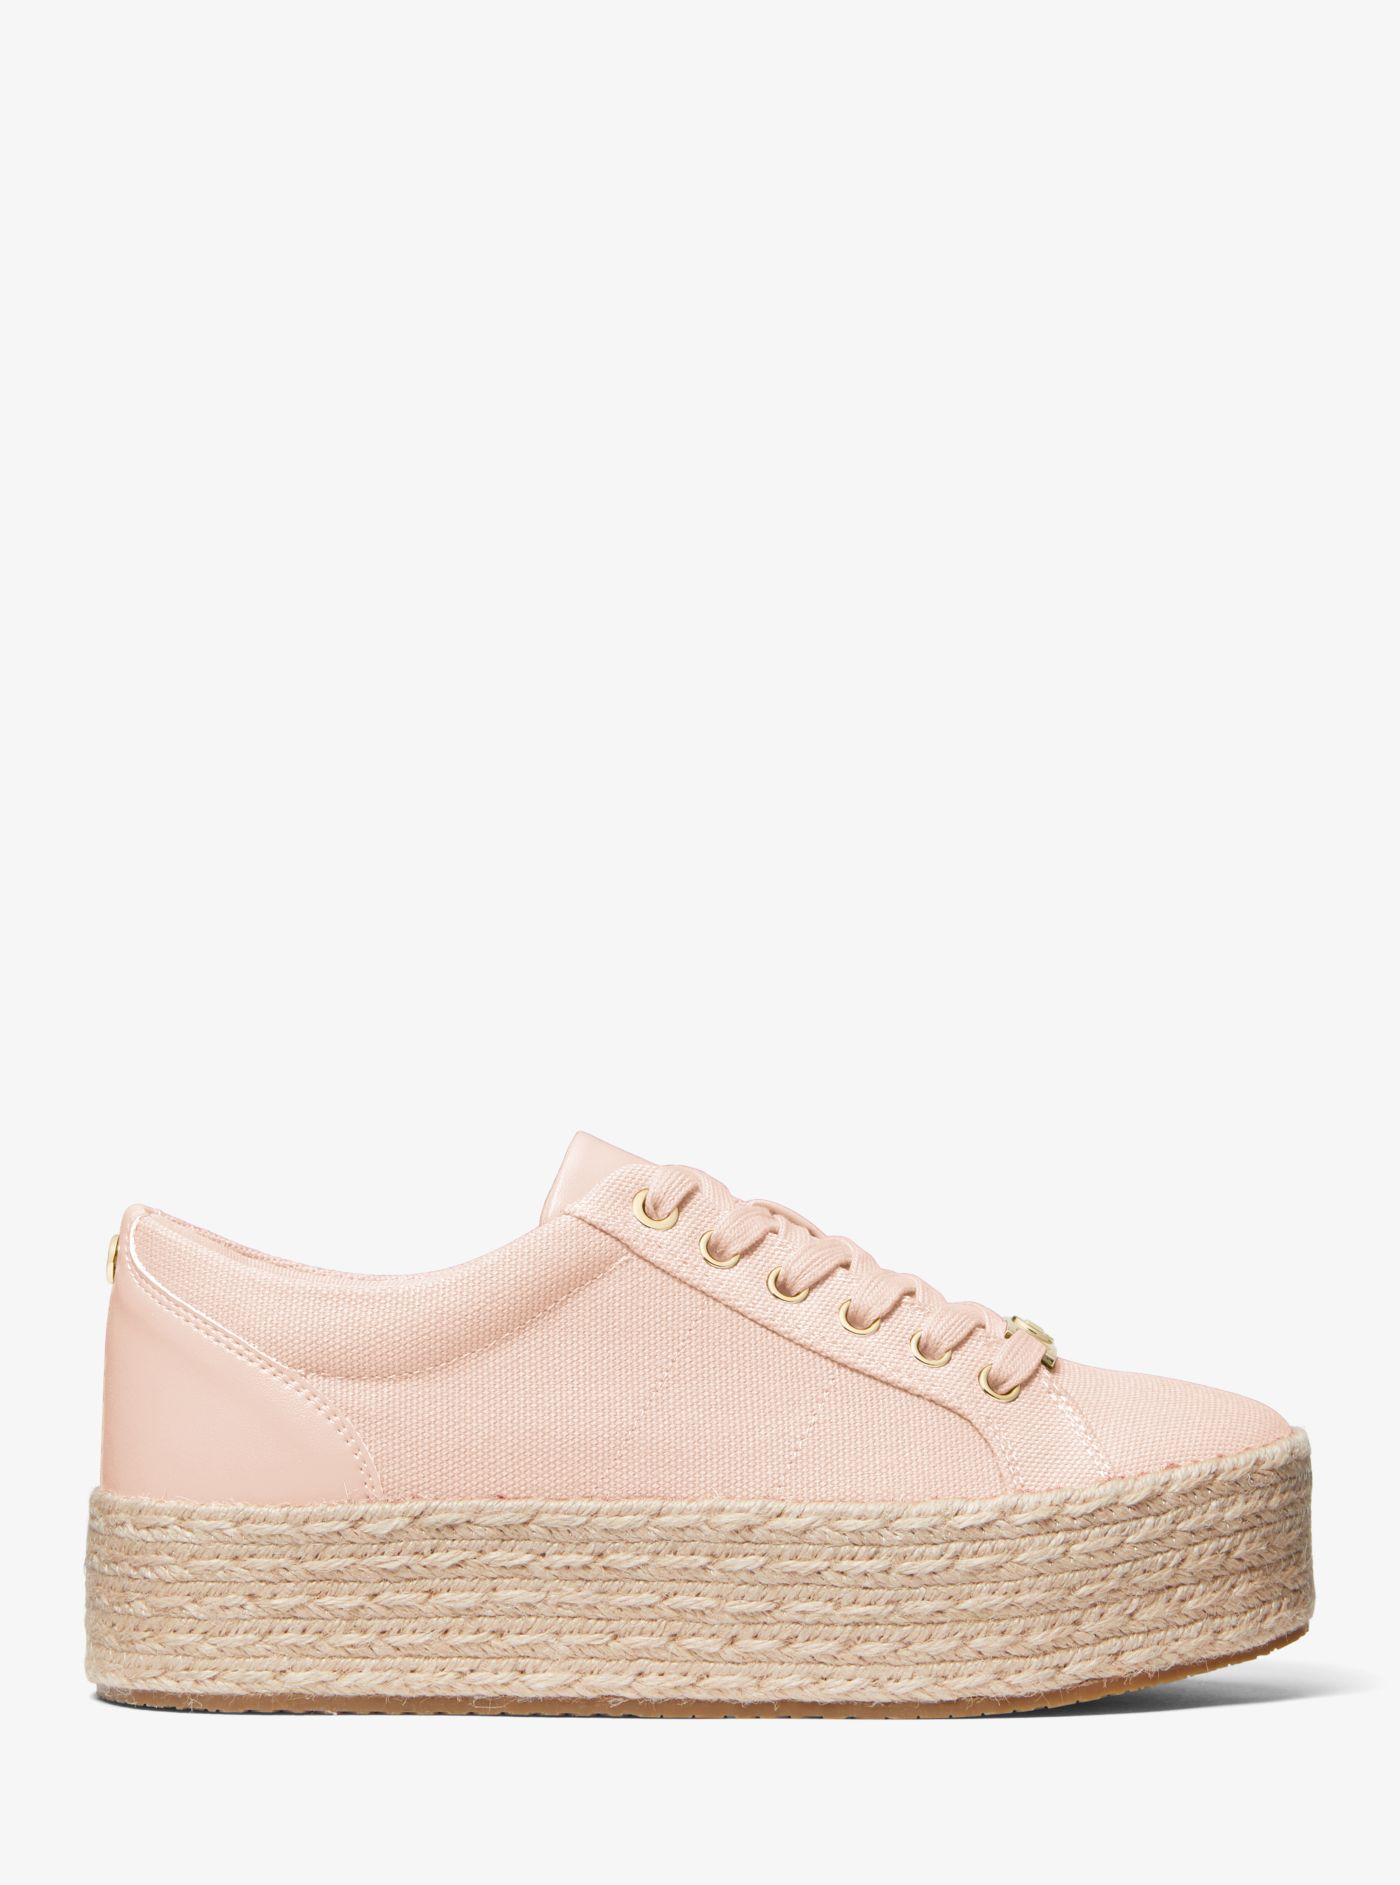 Michael Kors Libby Cotton Canvas Platform Sneaker in Pink | Lyst